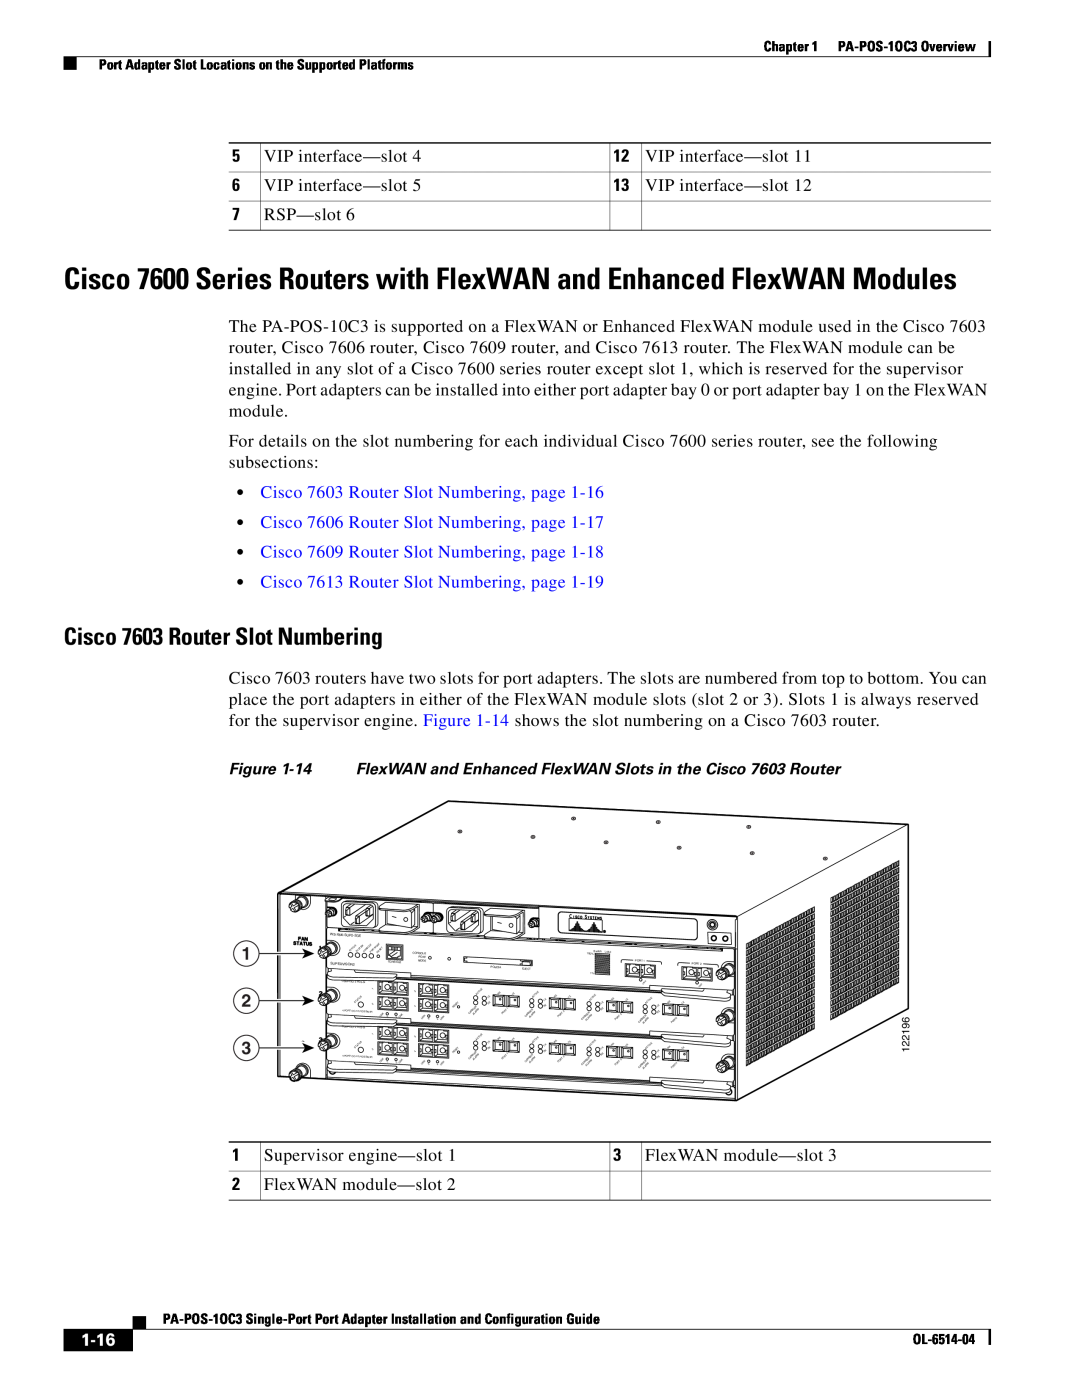 Cisco Systems PA-POS-2OC3, PA-POS-1OC3 manual Cisco 7600 Series Routers with FlexWAN and Enhanced FlexWAN Modules, 1-16 